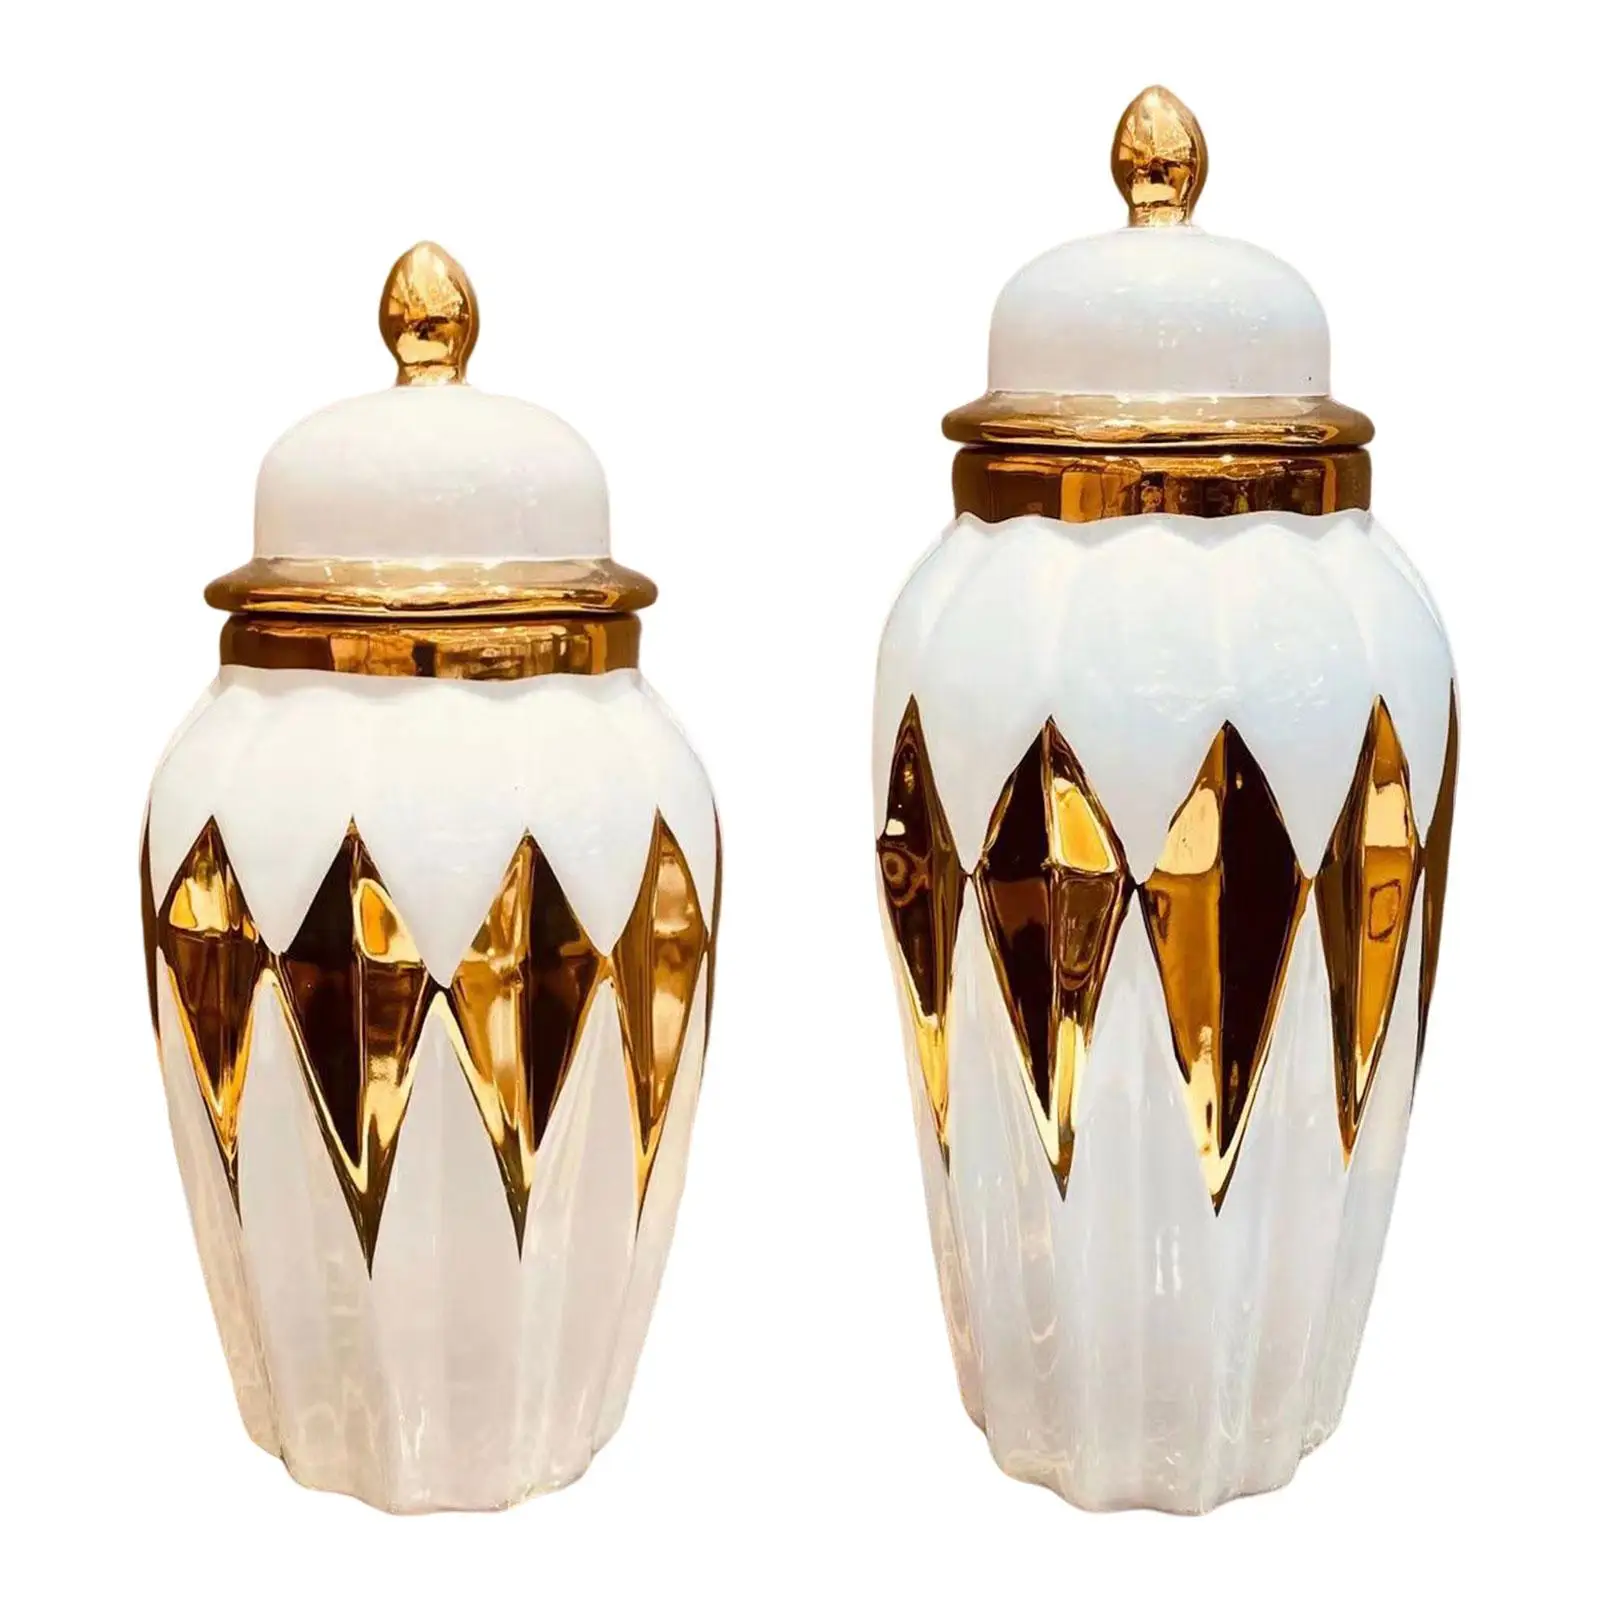 Ceramic Ginger Jars with Lid Vase Tea Tin Candy Holder for Home Decorations